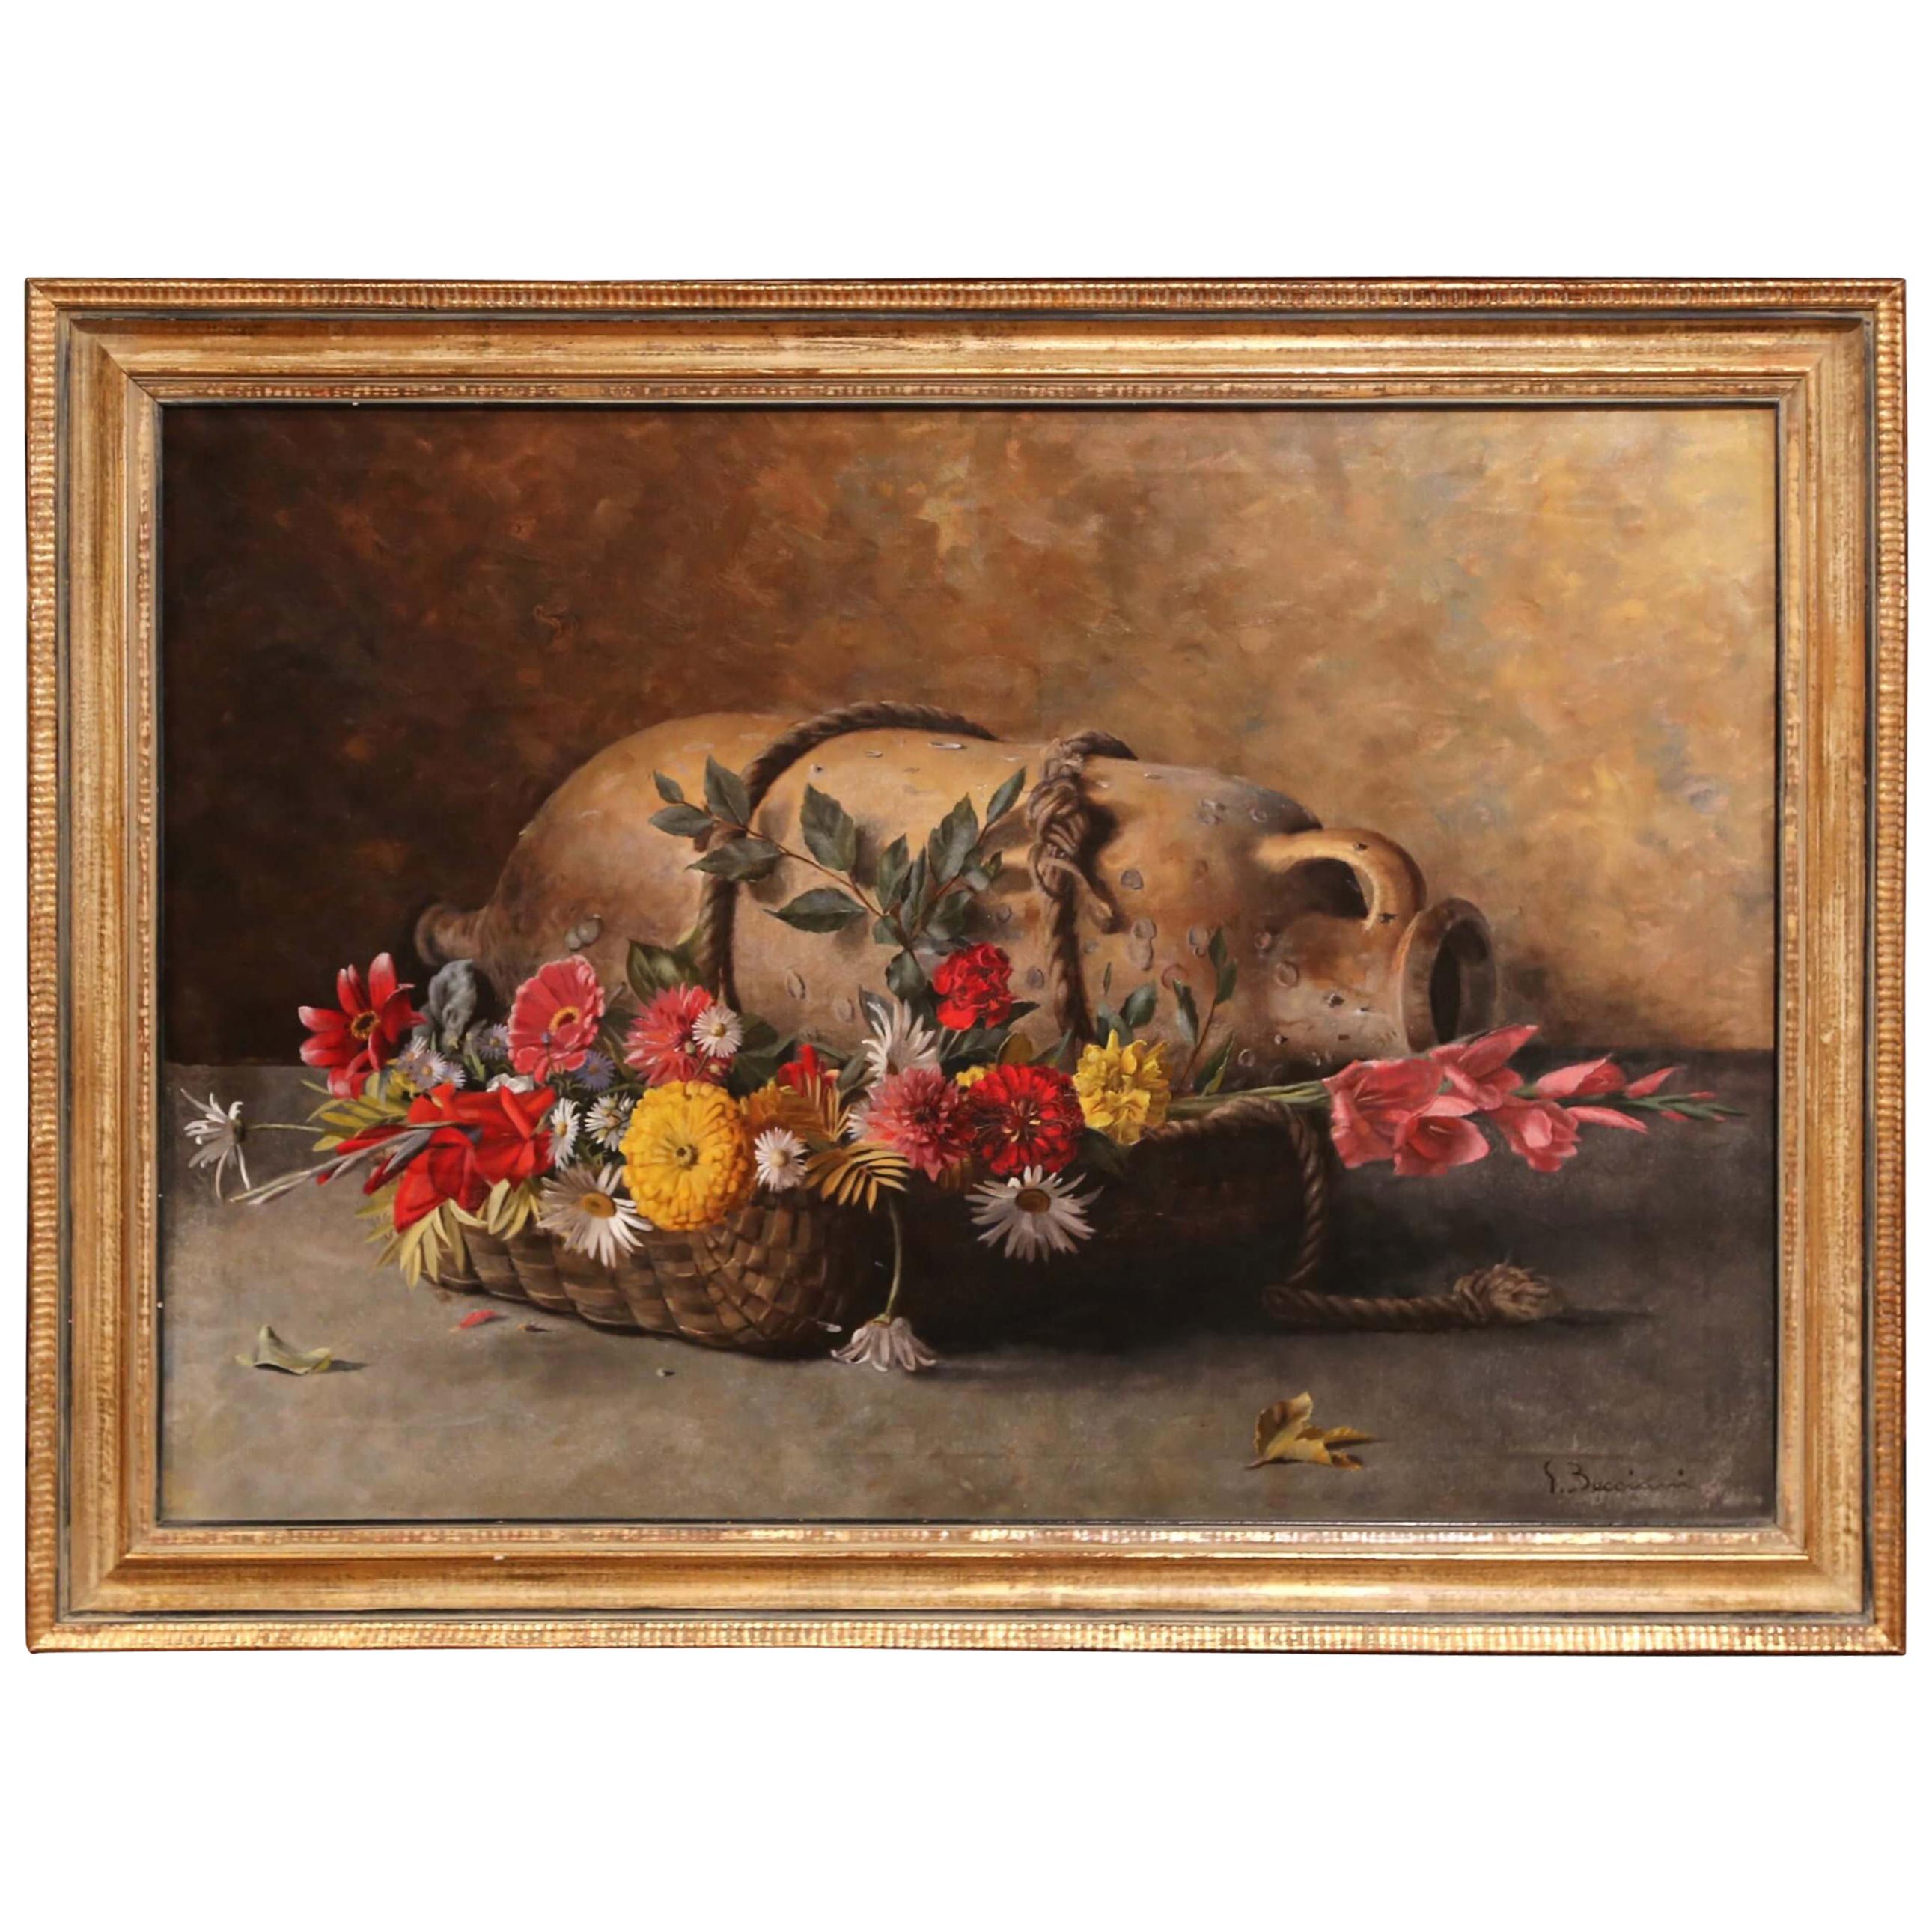 Early 20th Century Italian Framed Still Life Oil Painting Signed G. Becciani